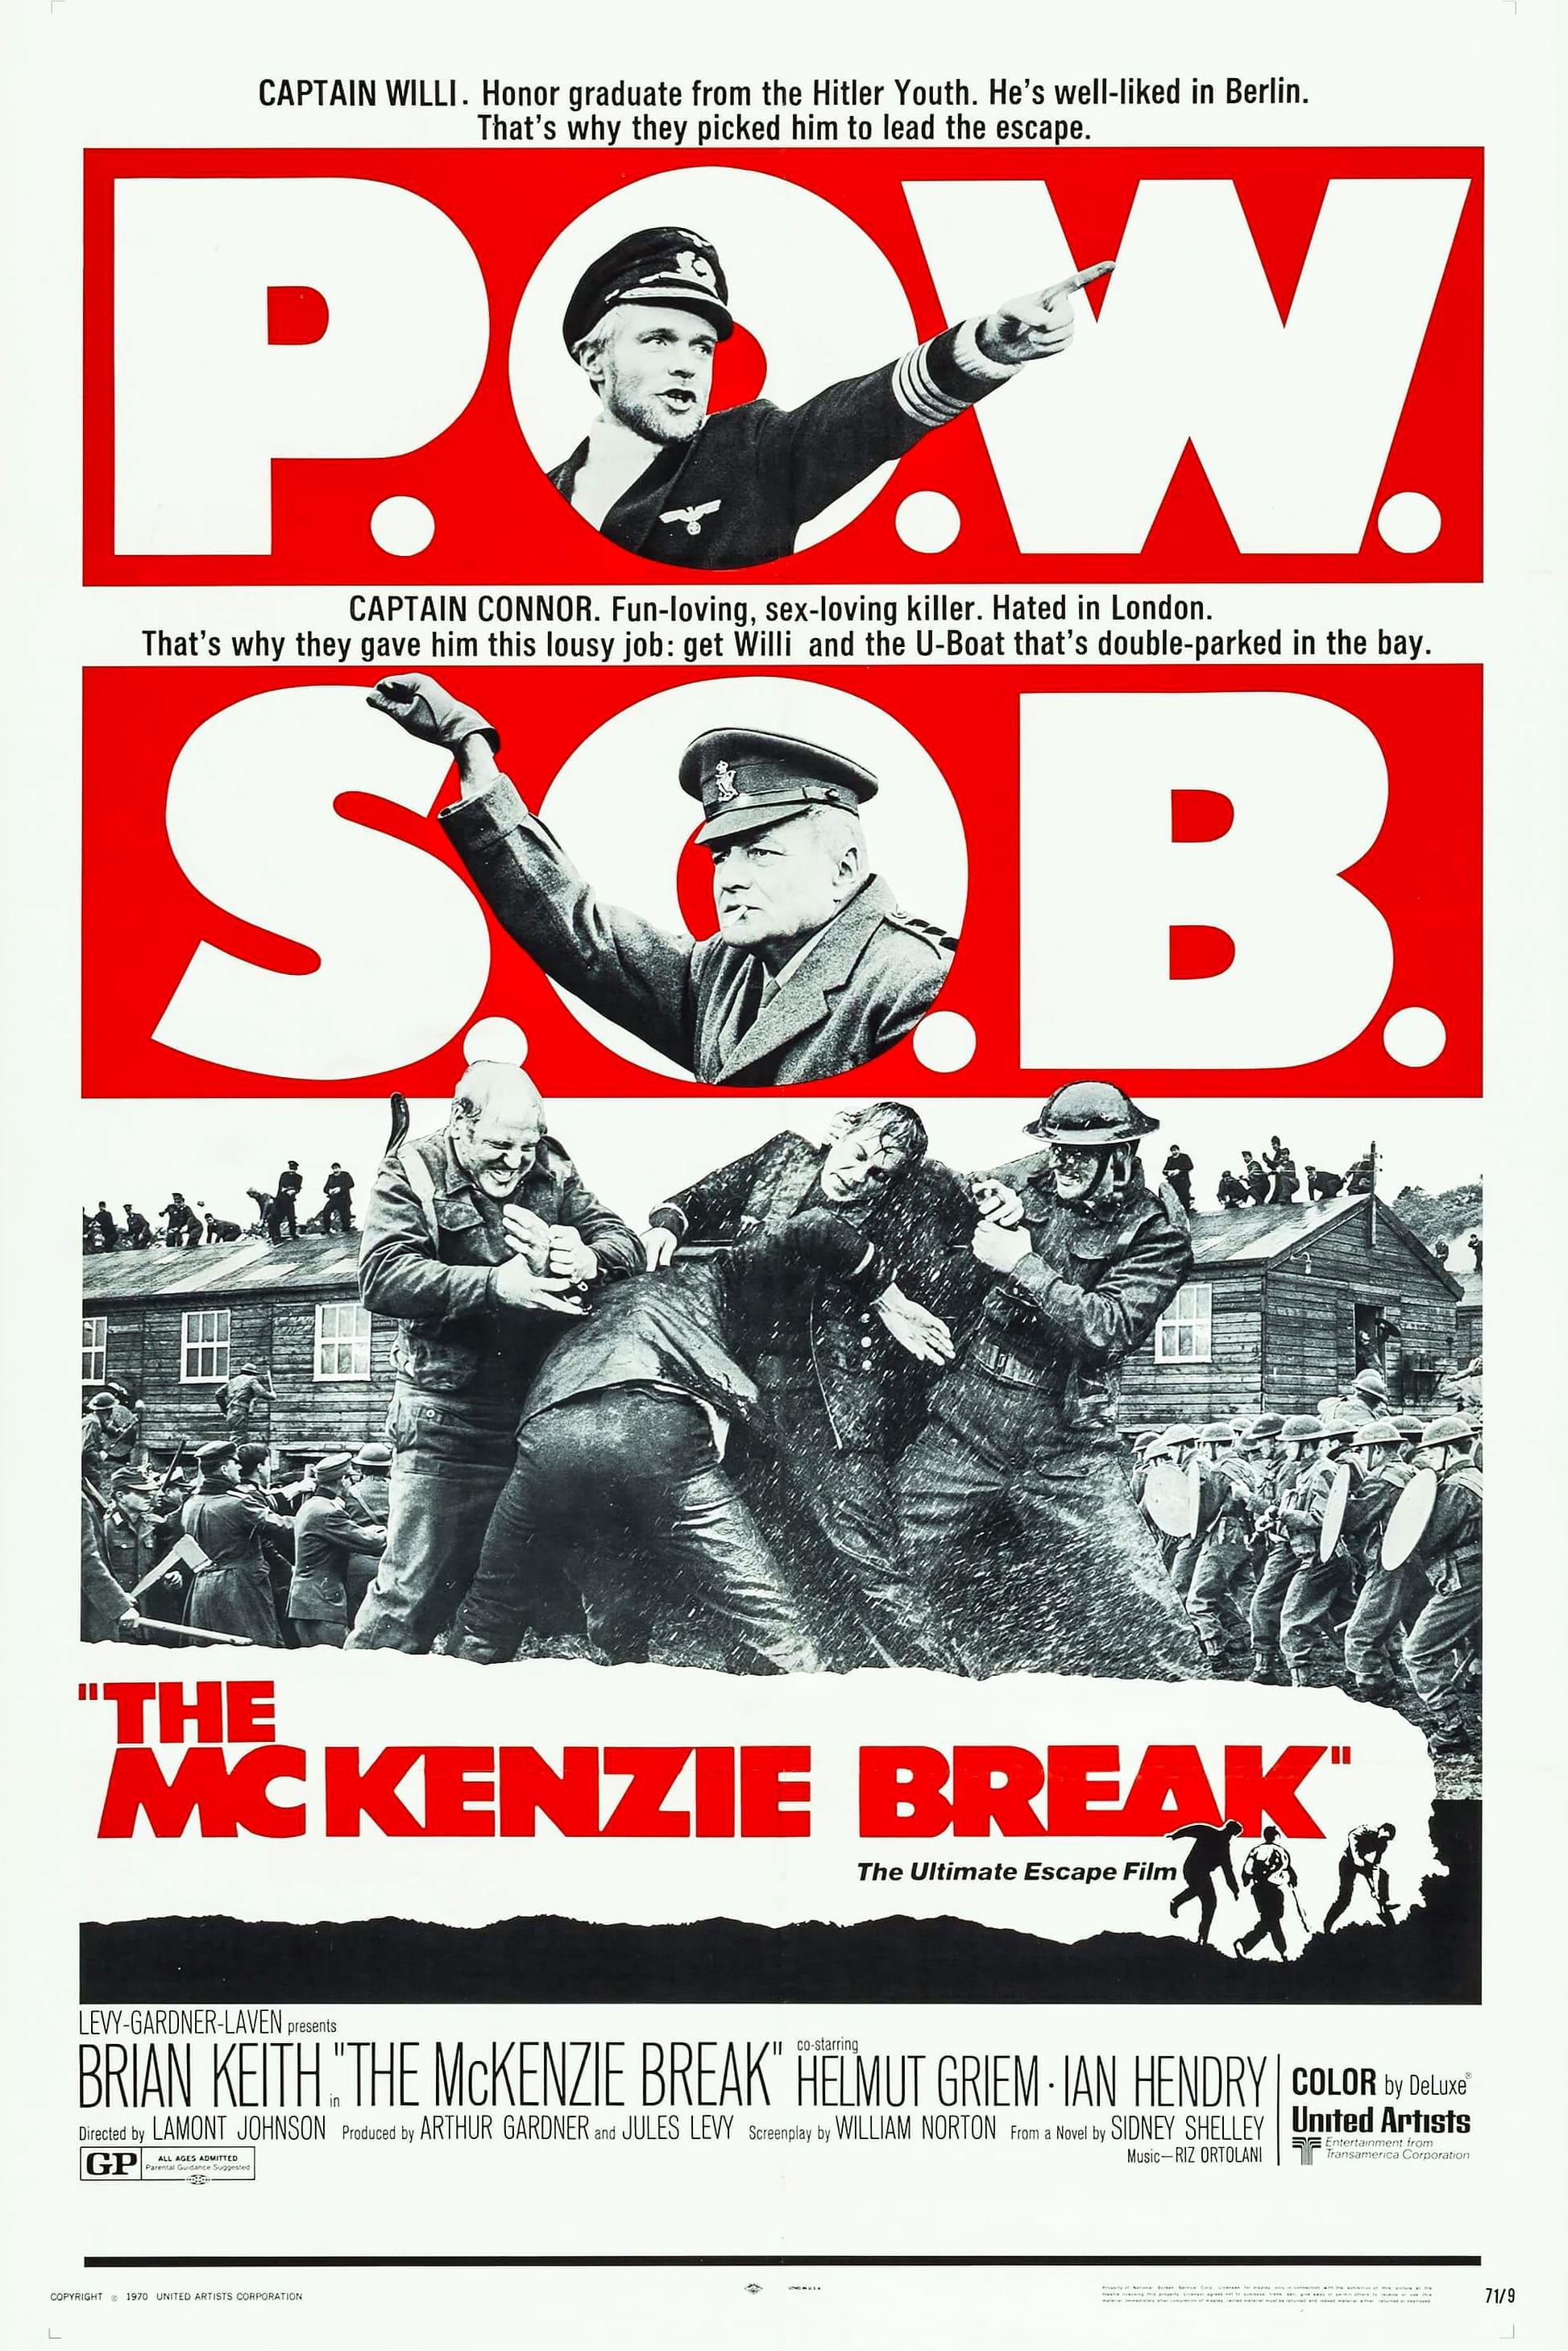 The McKenzie Break poster